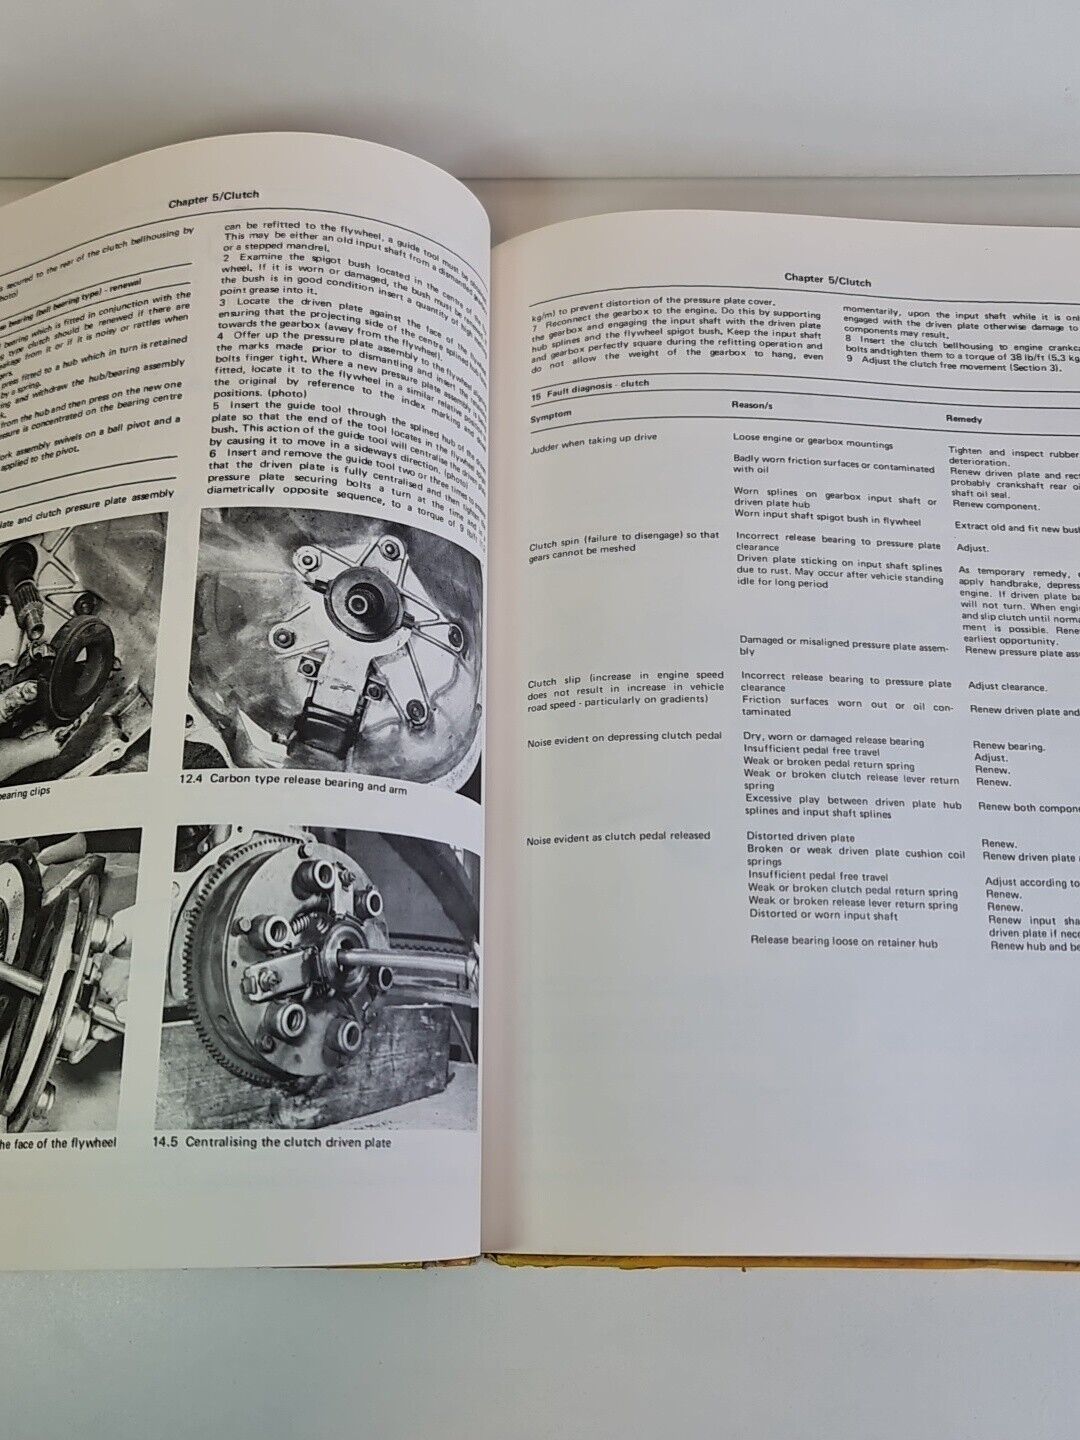 Haynes - Simca 1300/1301 and 1500/1501 Owner's Workshop Manual -